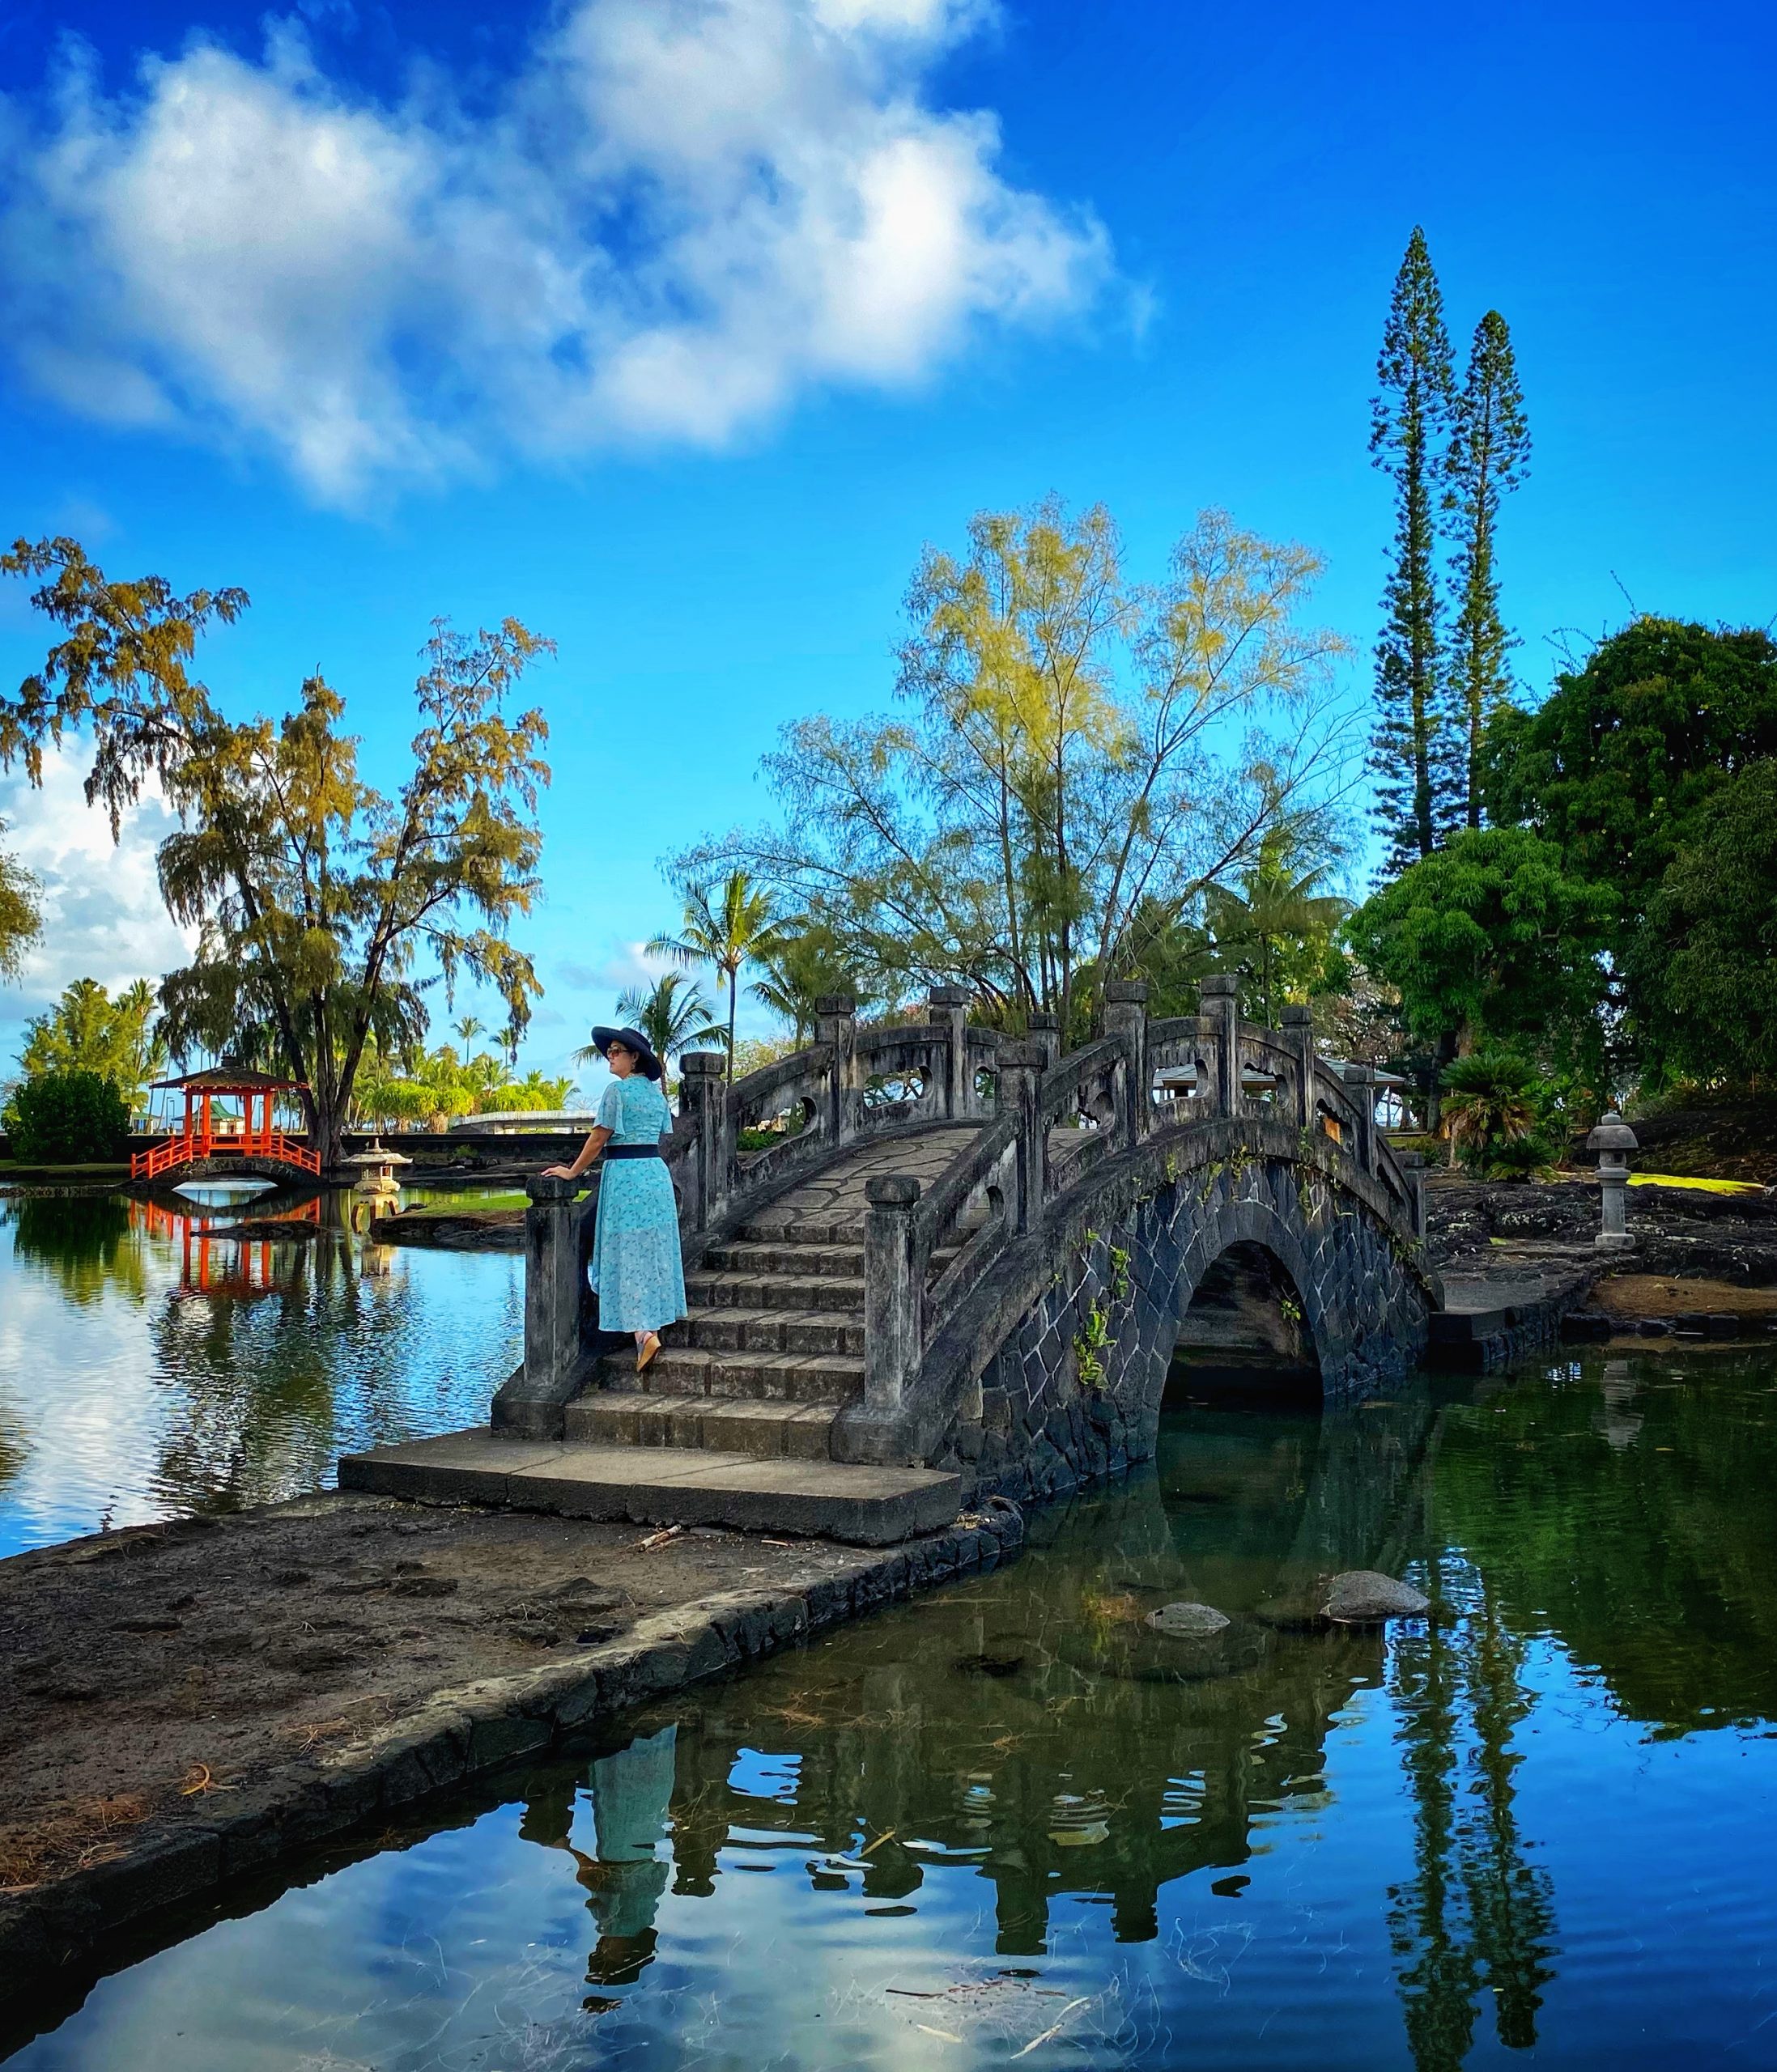 Japanese Bridge and pond at the Liliʻuokalani Park and Gardens